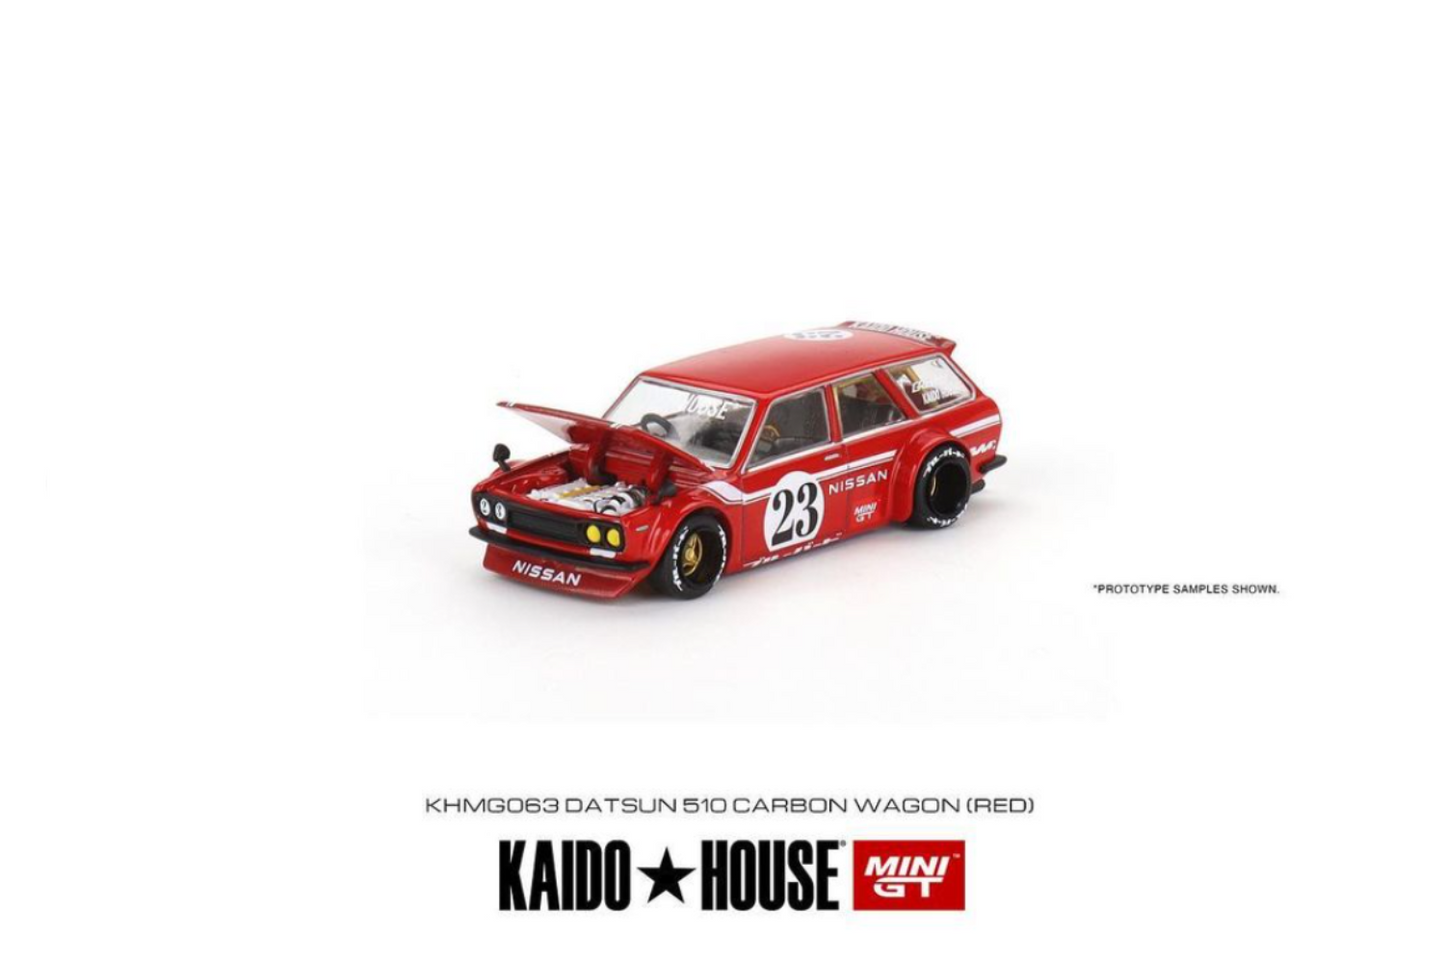 Mini GT x Kaido House Datsun 510 Carbon Wagon in Red